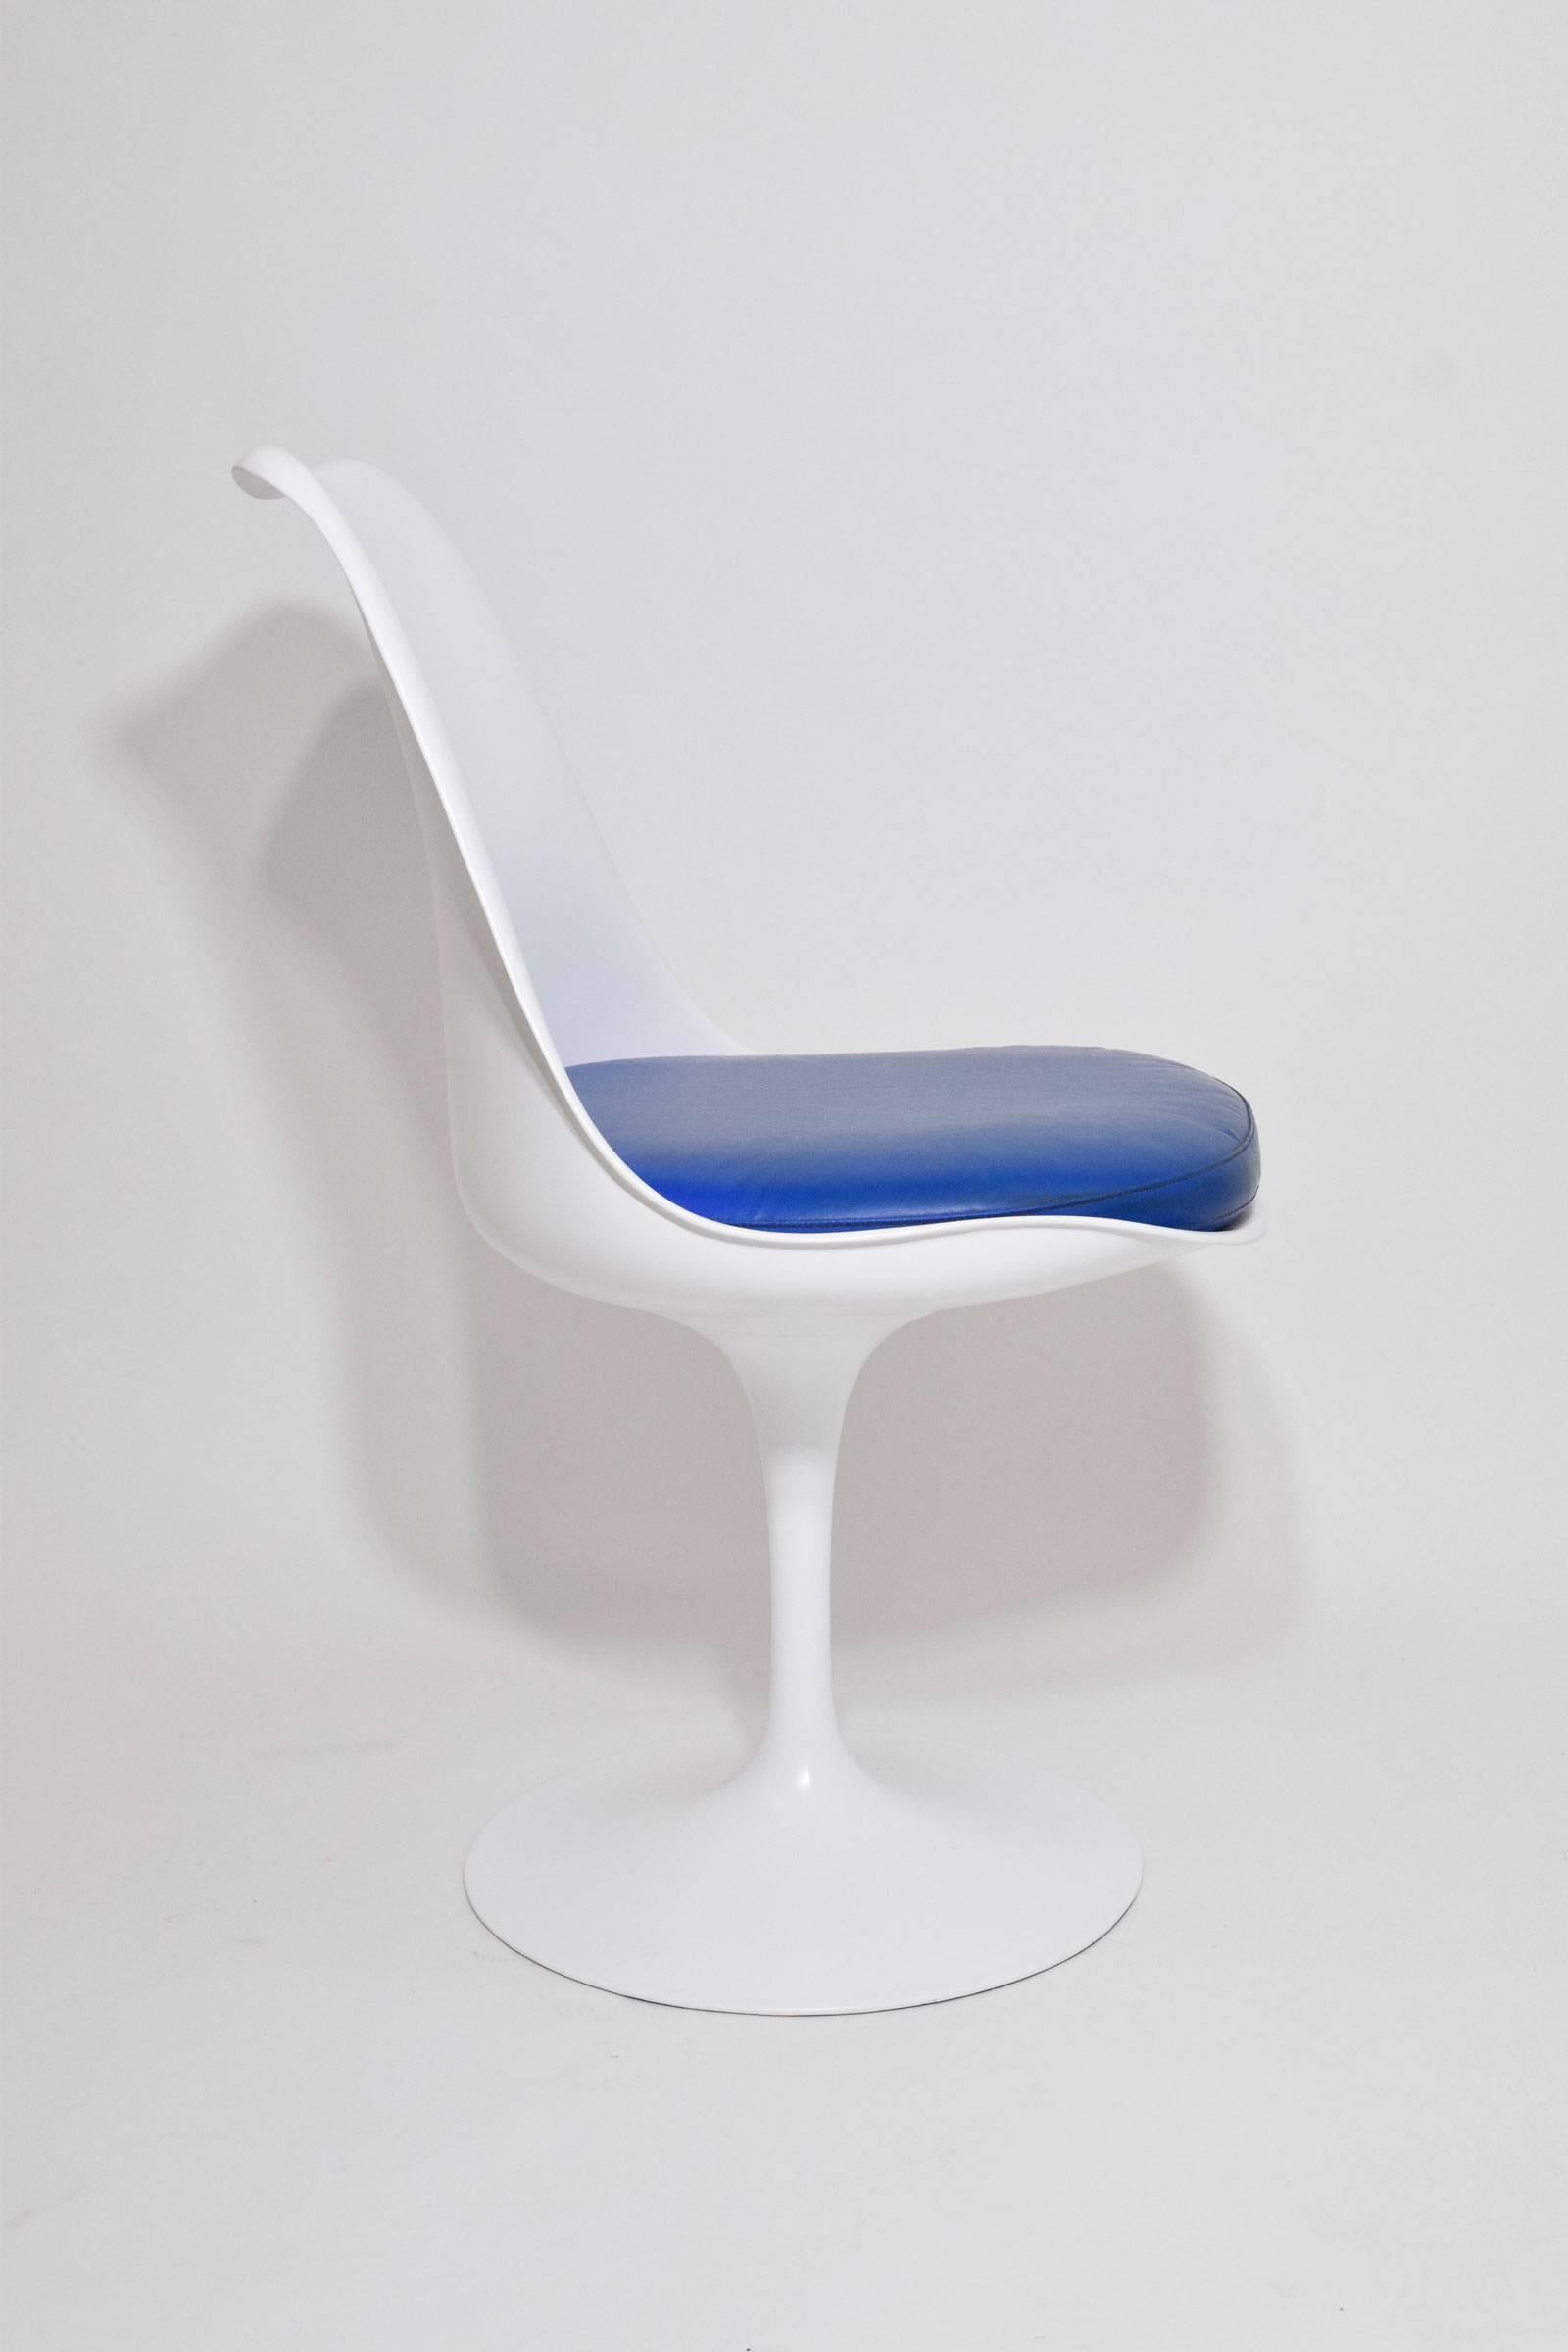 American Set of Four Early Eero Saarinen Tulip Chairs by Knoll